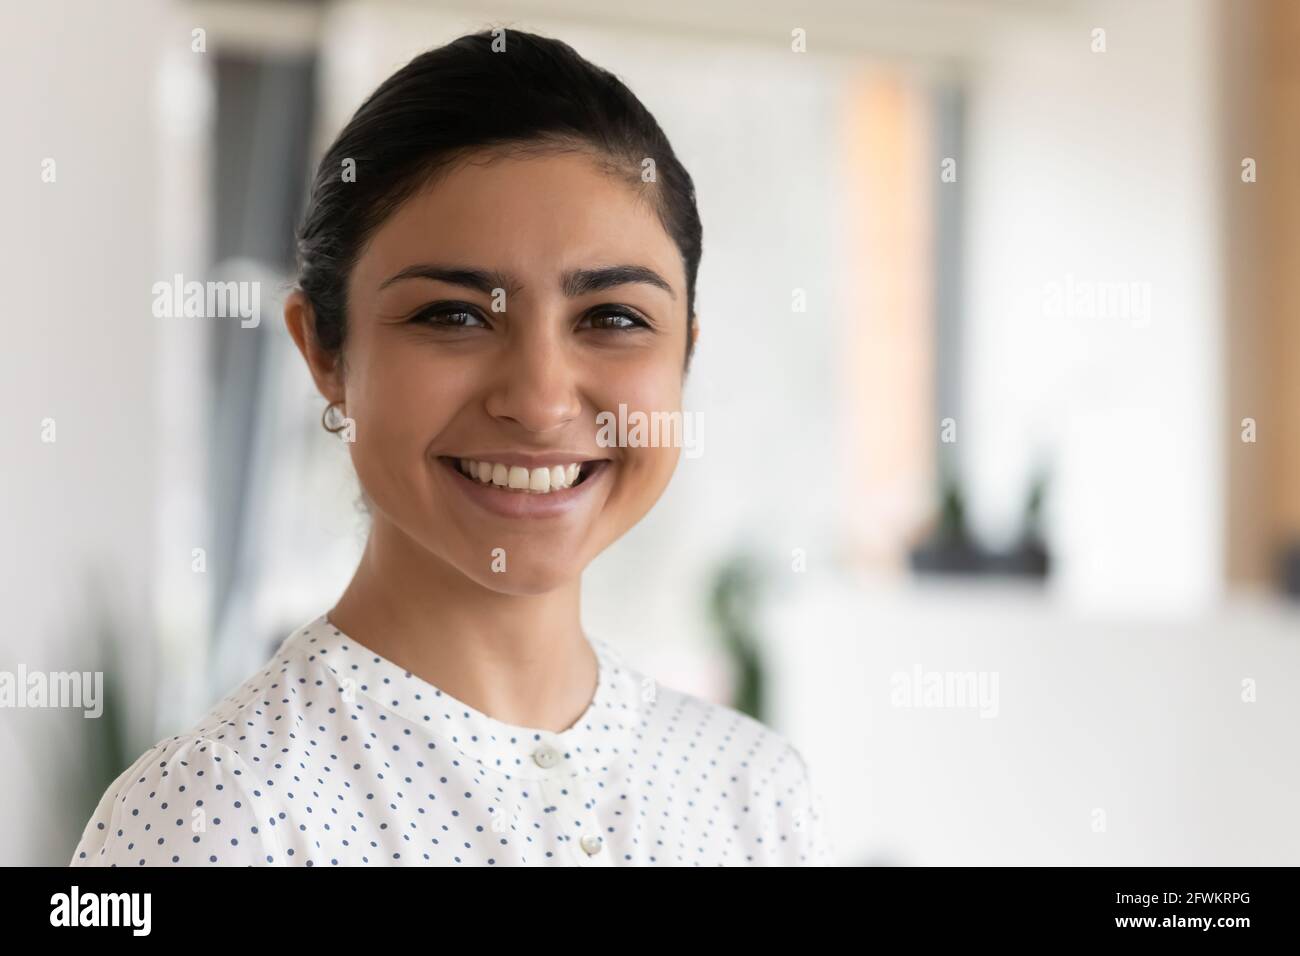 Head shot portrait of confident successful smiling Indian businesswoman Stock Photo